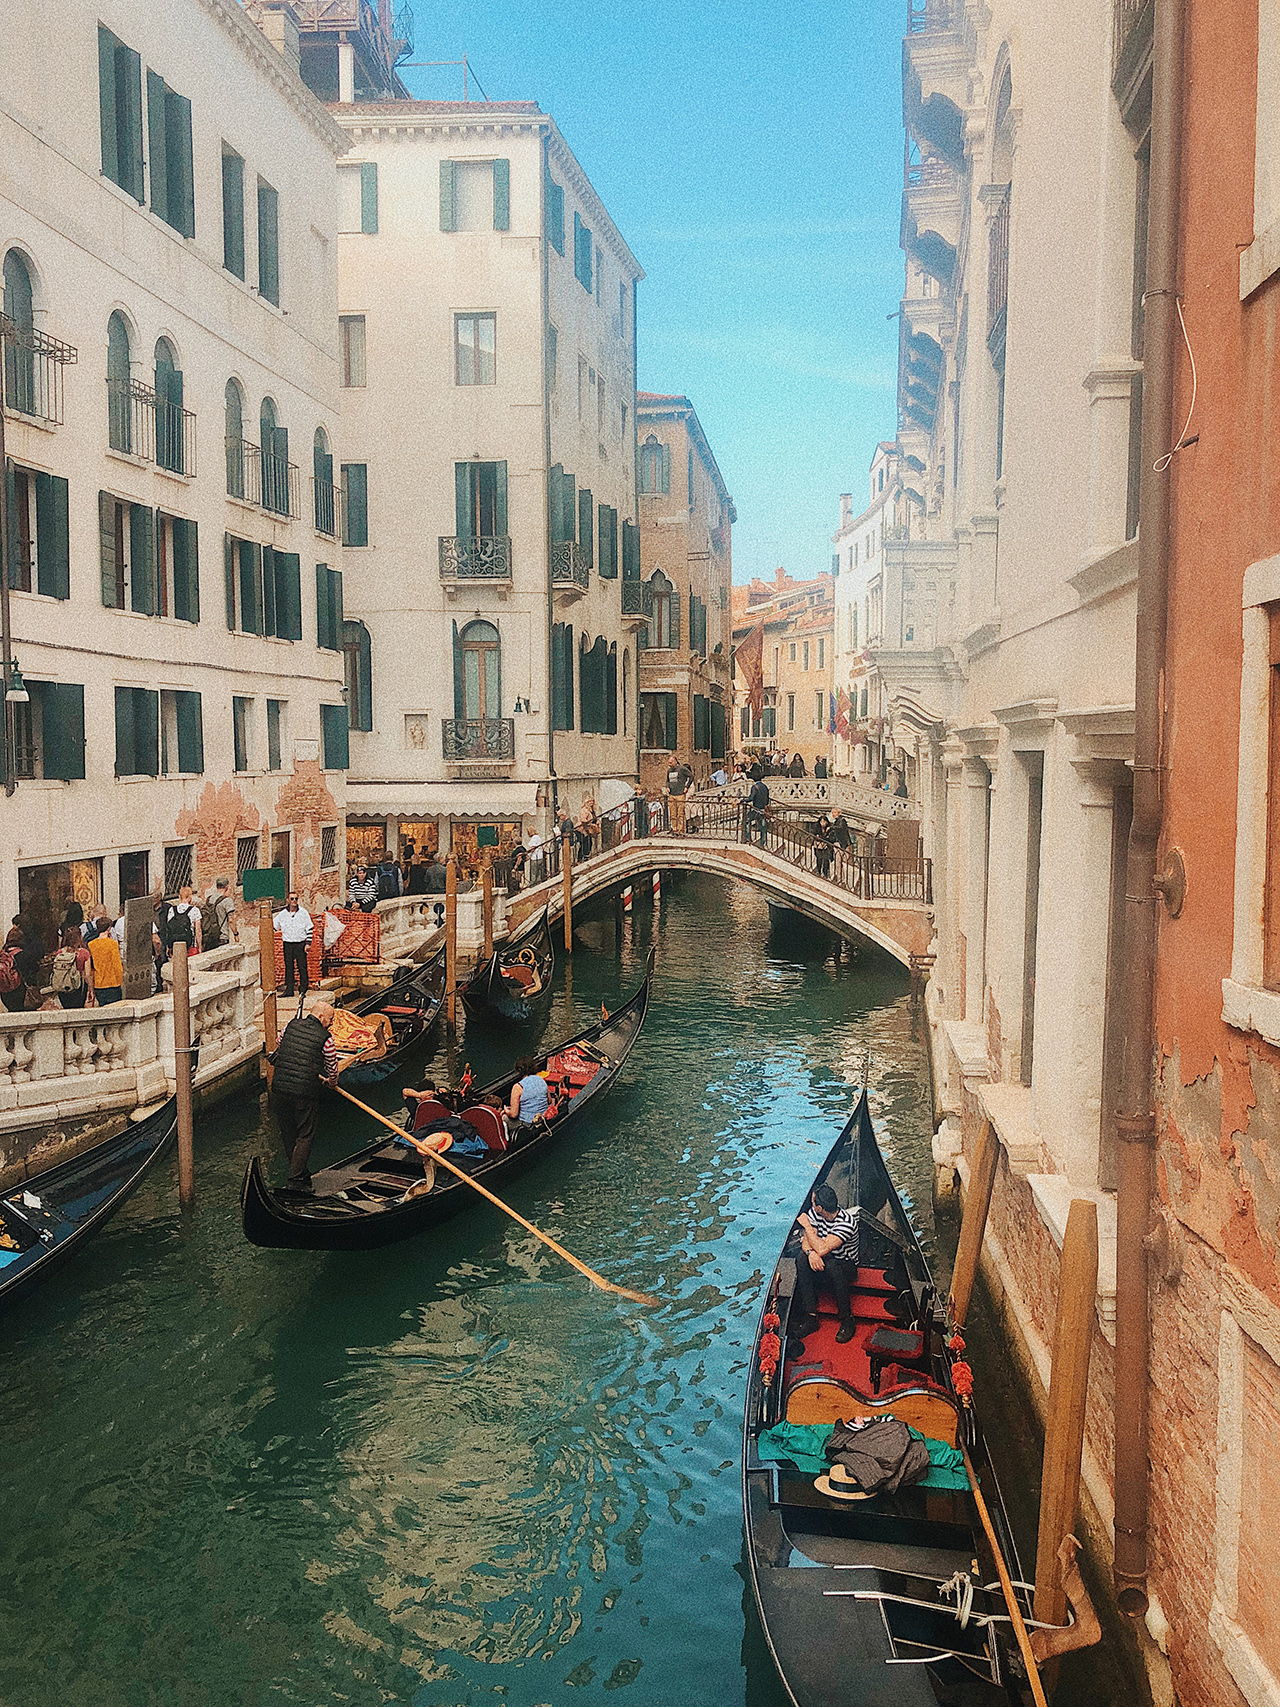 water bridge and gondola in Venice Italy